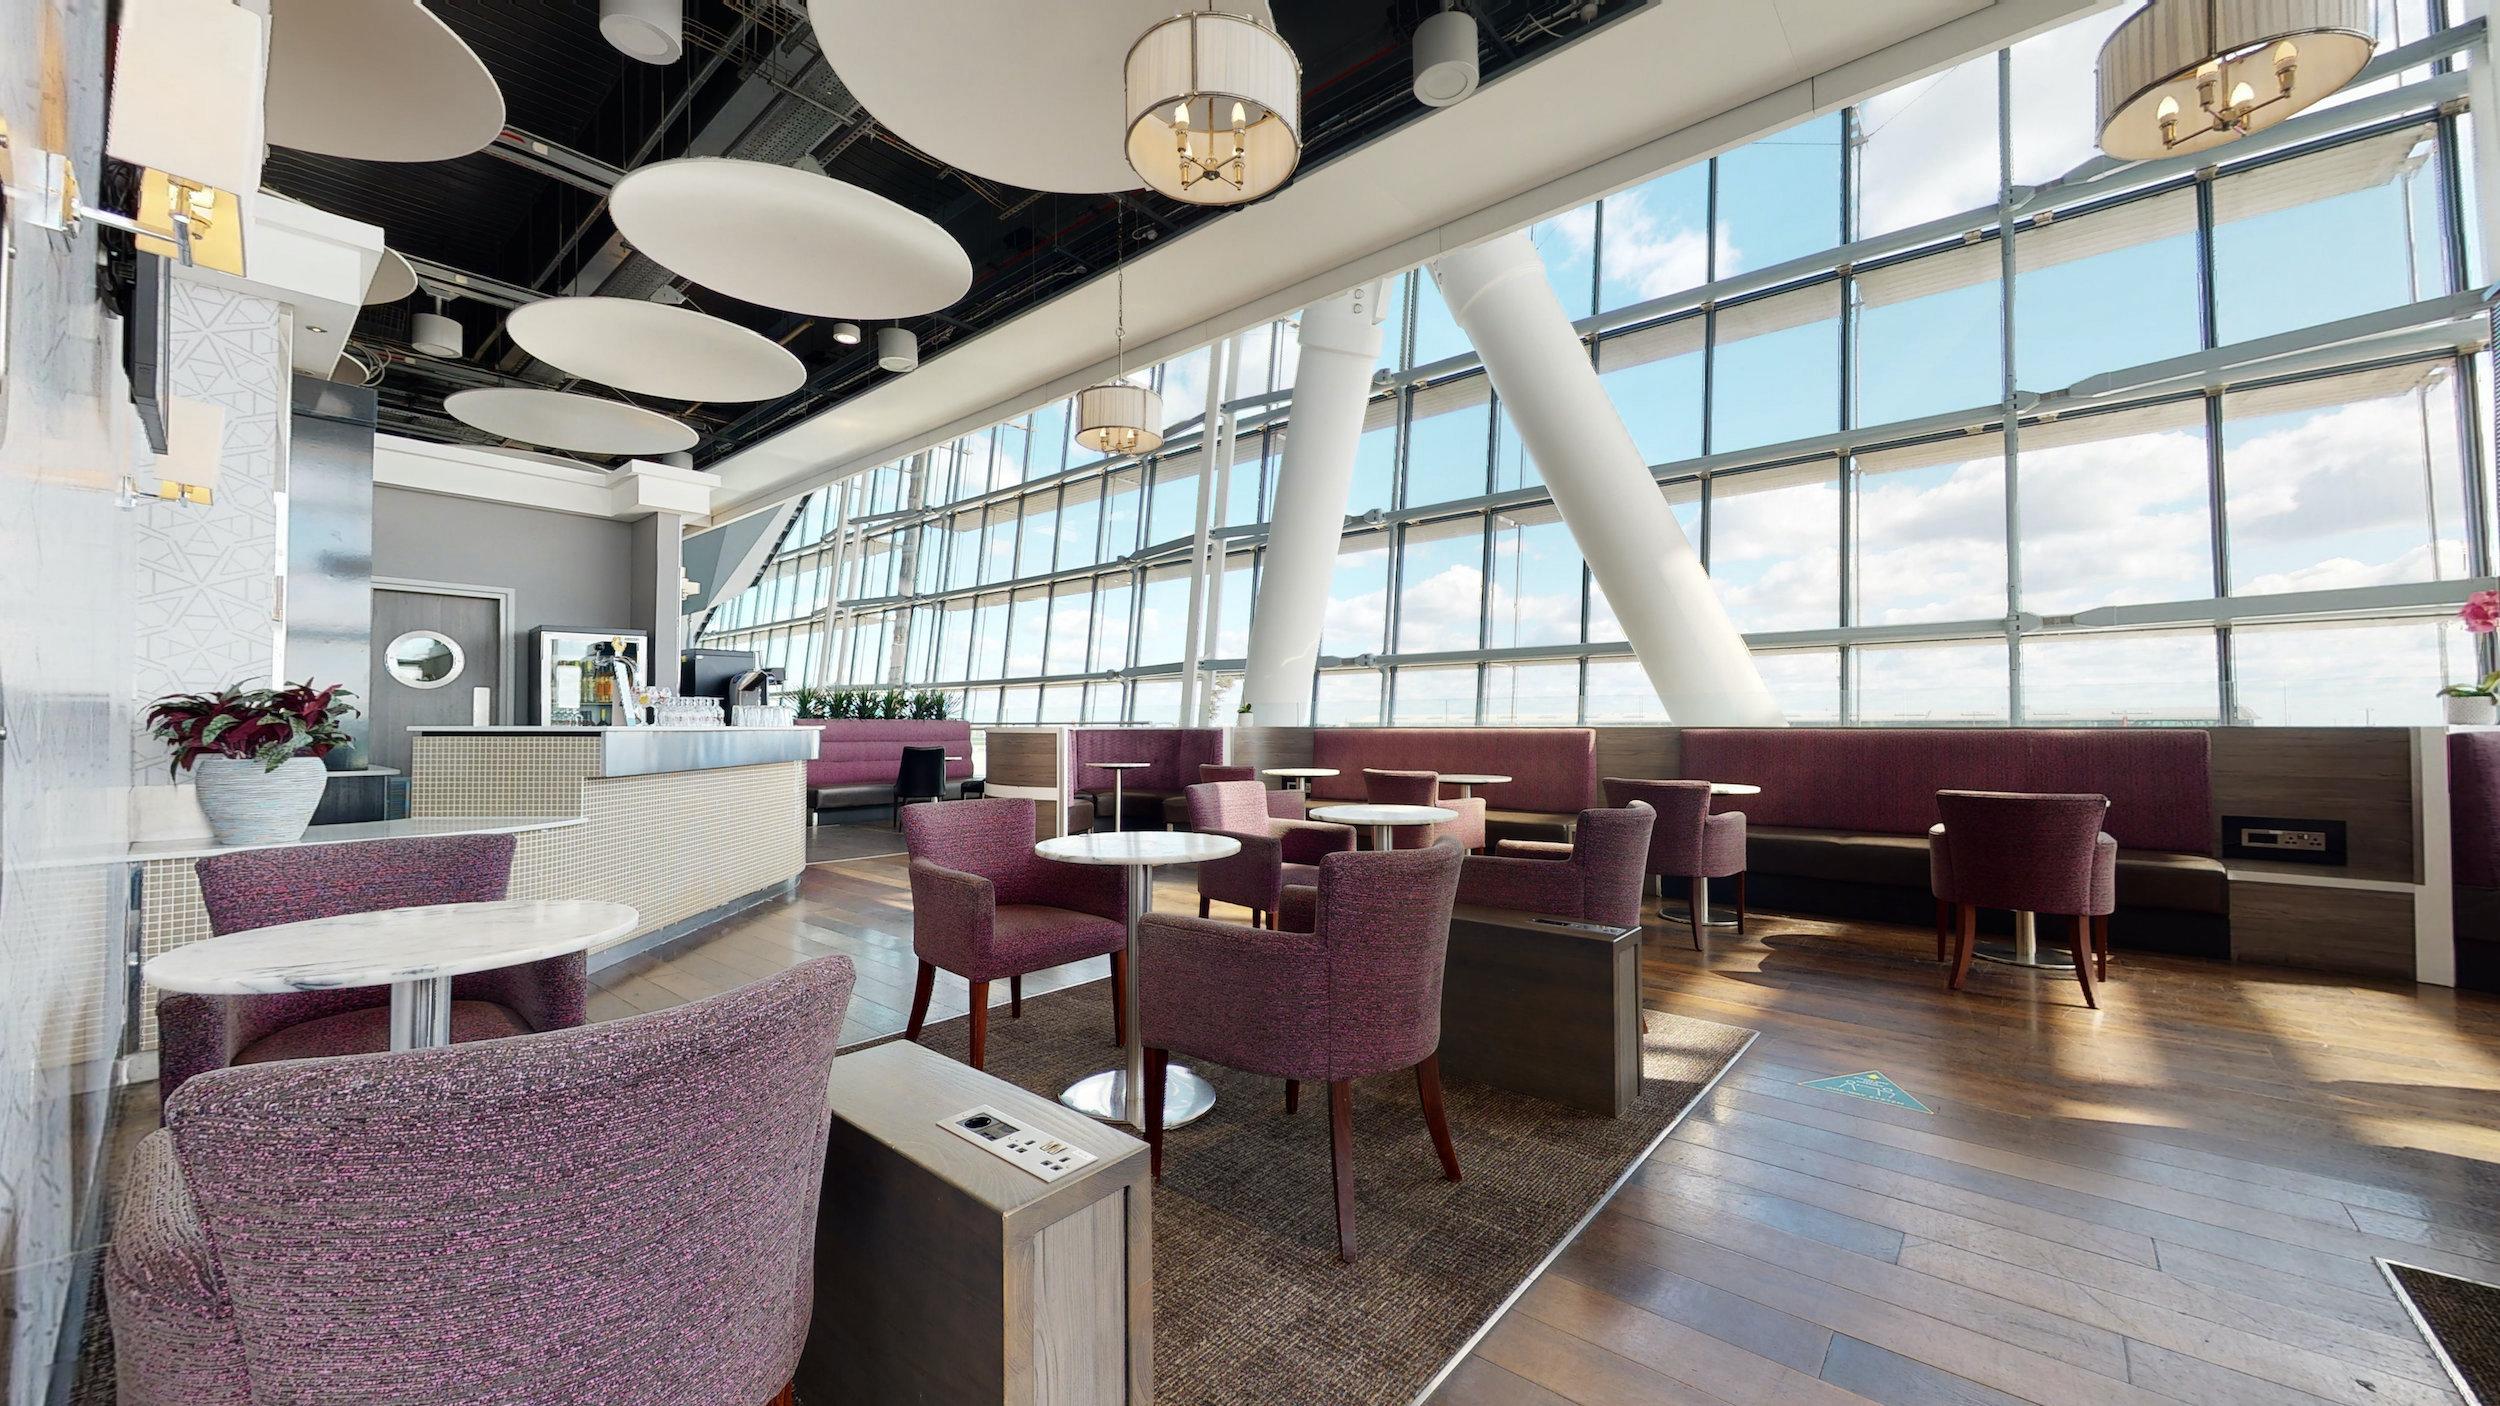 Club Aspire Heathrow Airport T5 Lounge Seating Area